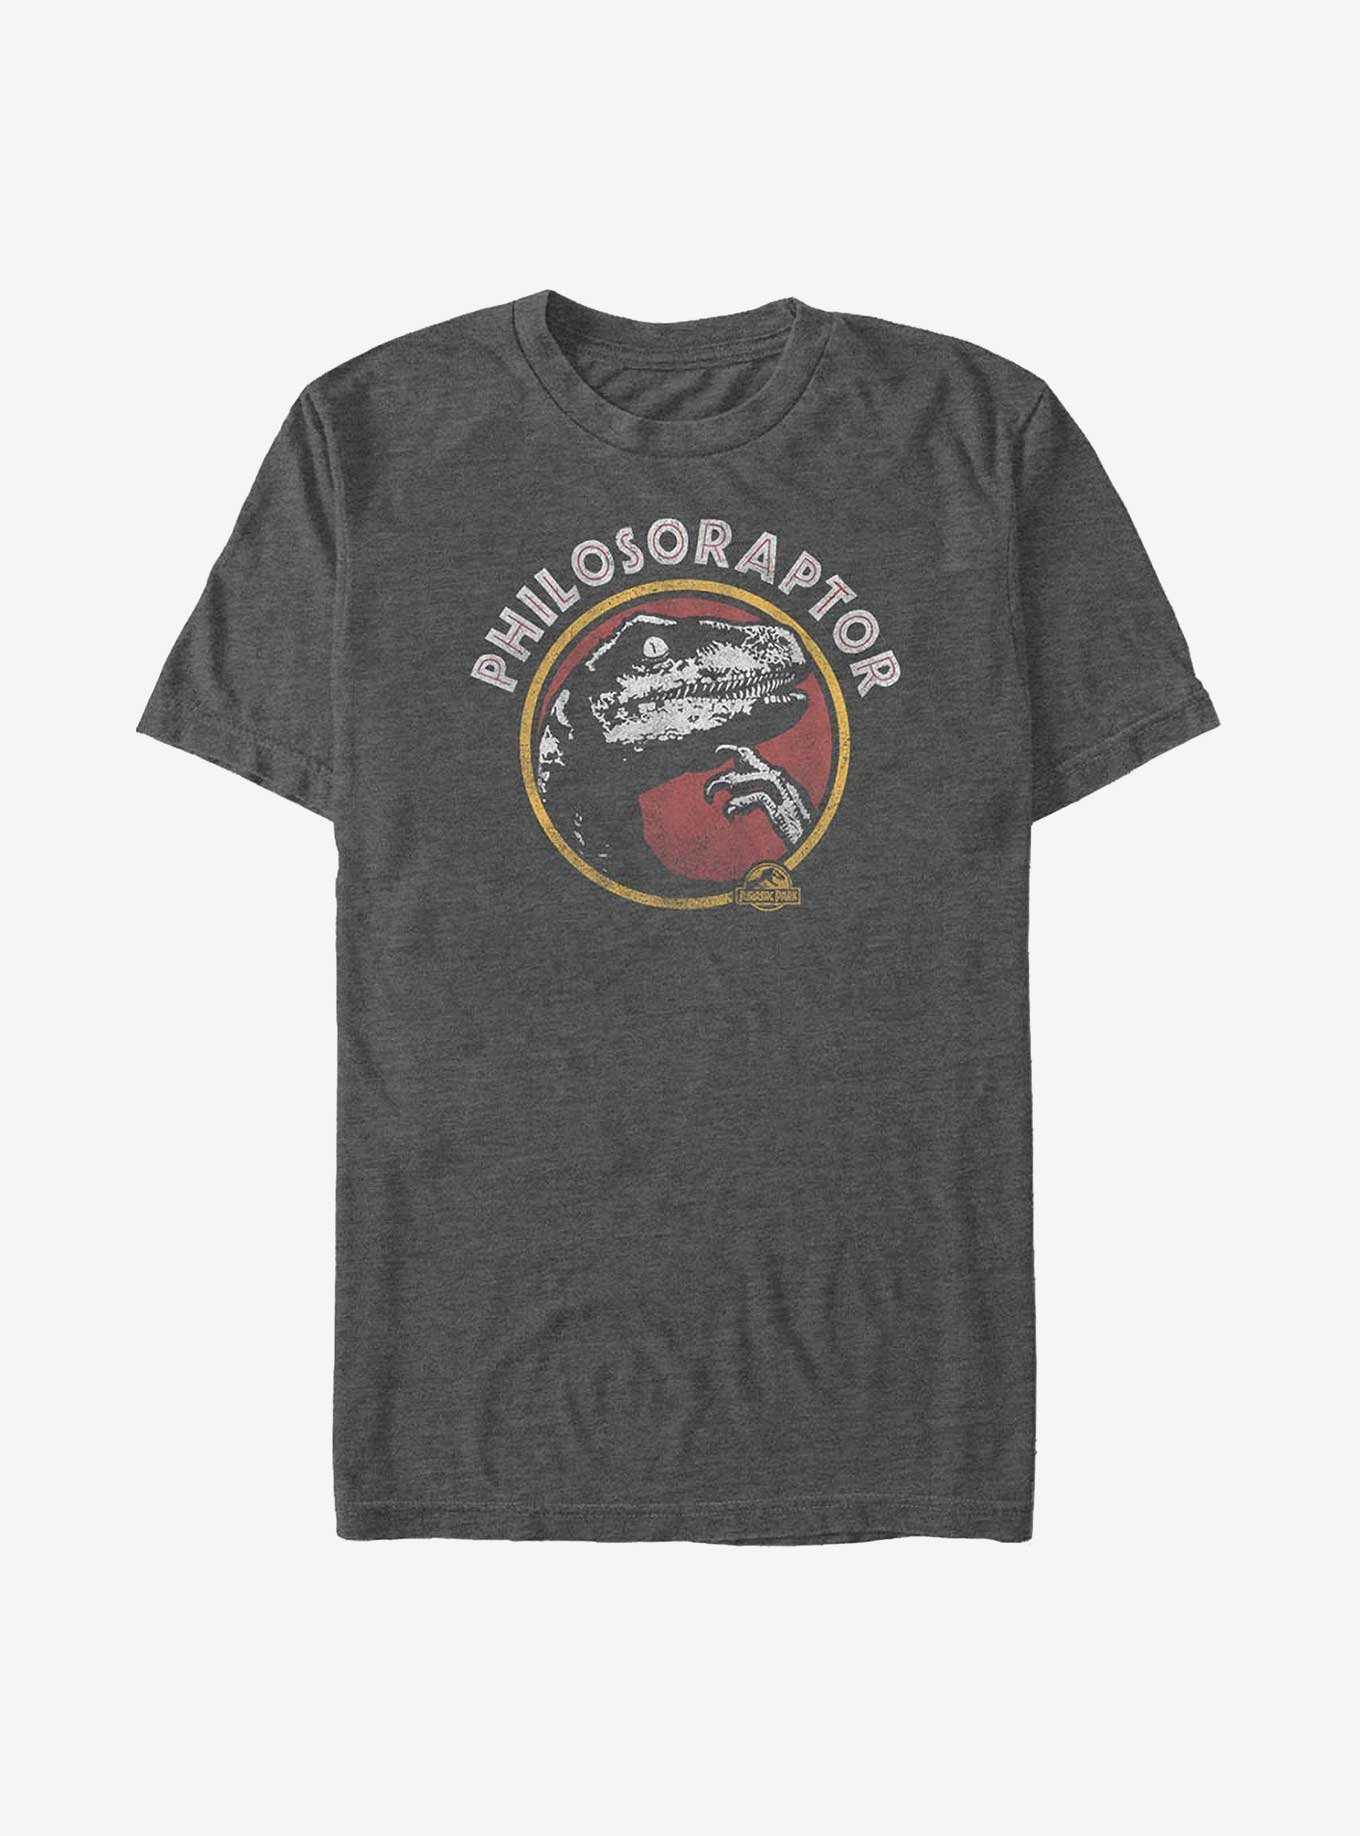 Jurassic Park Philoso-Raptor Big & Tall T-Shirt, , hi-res